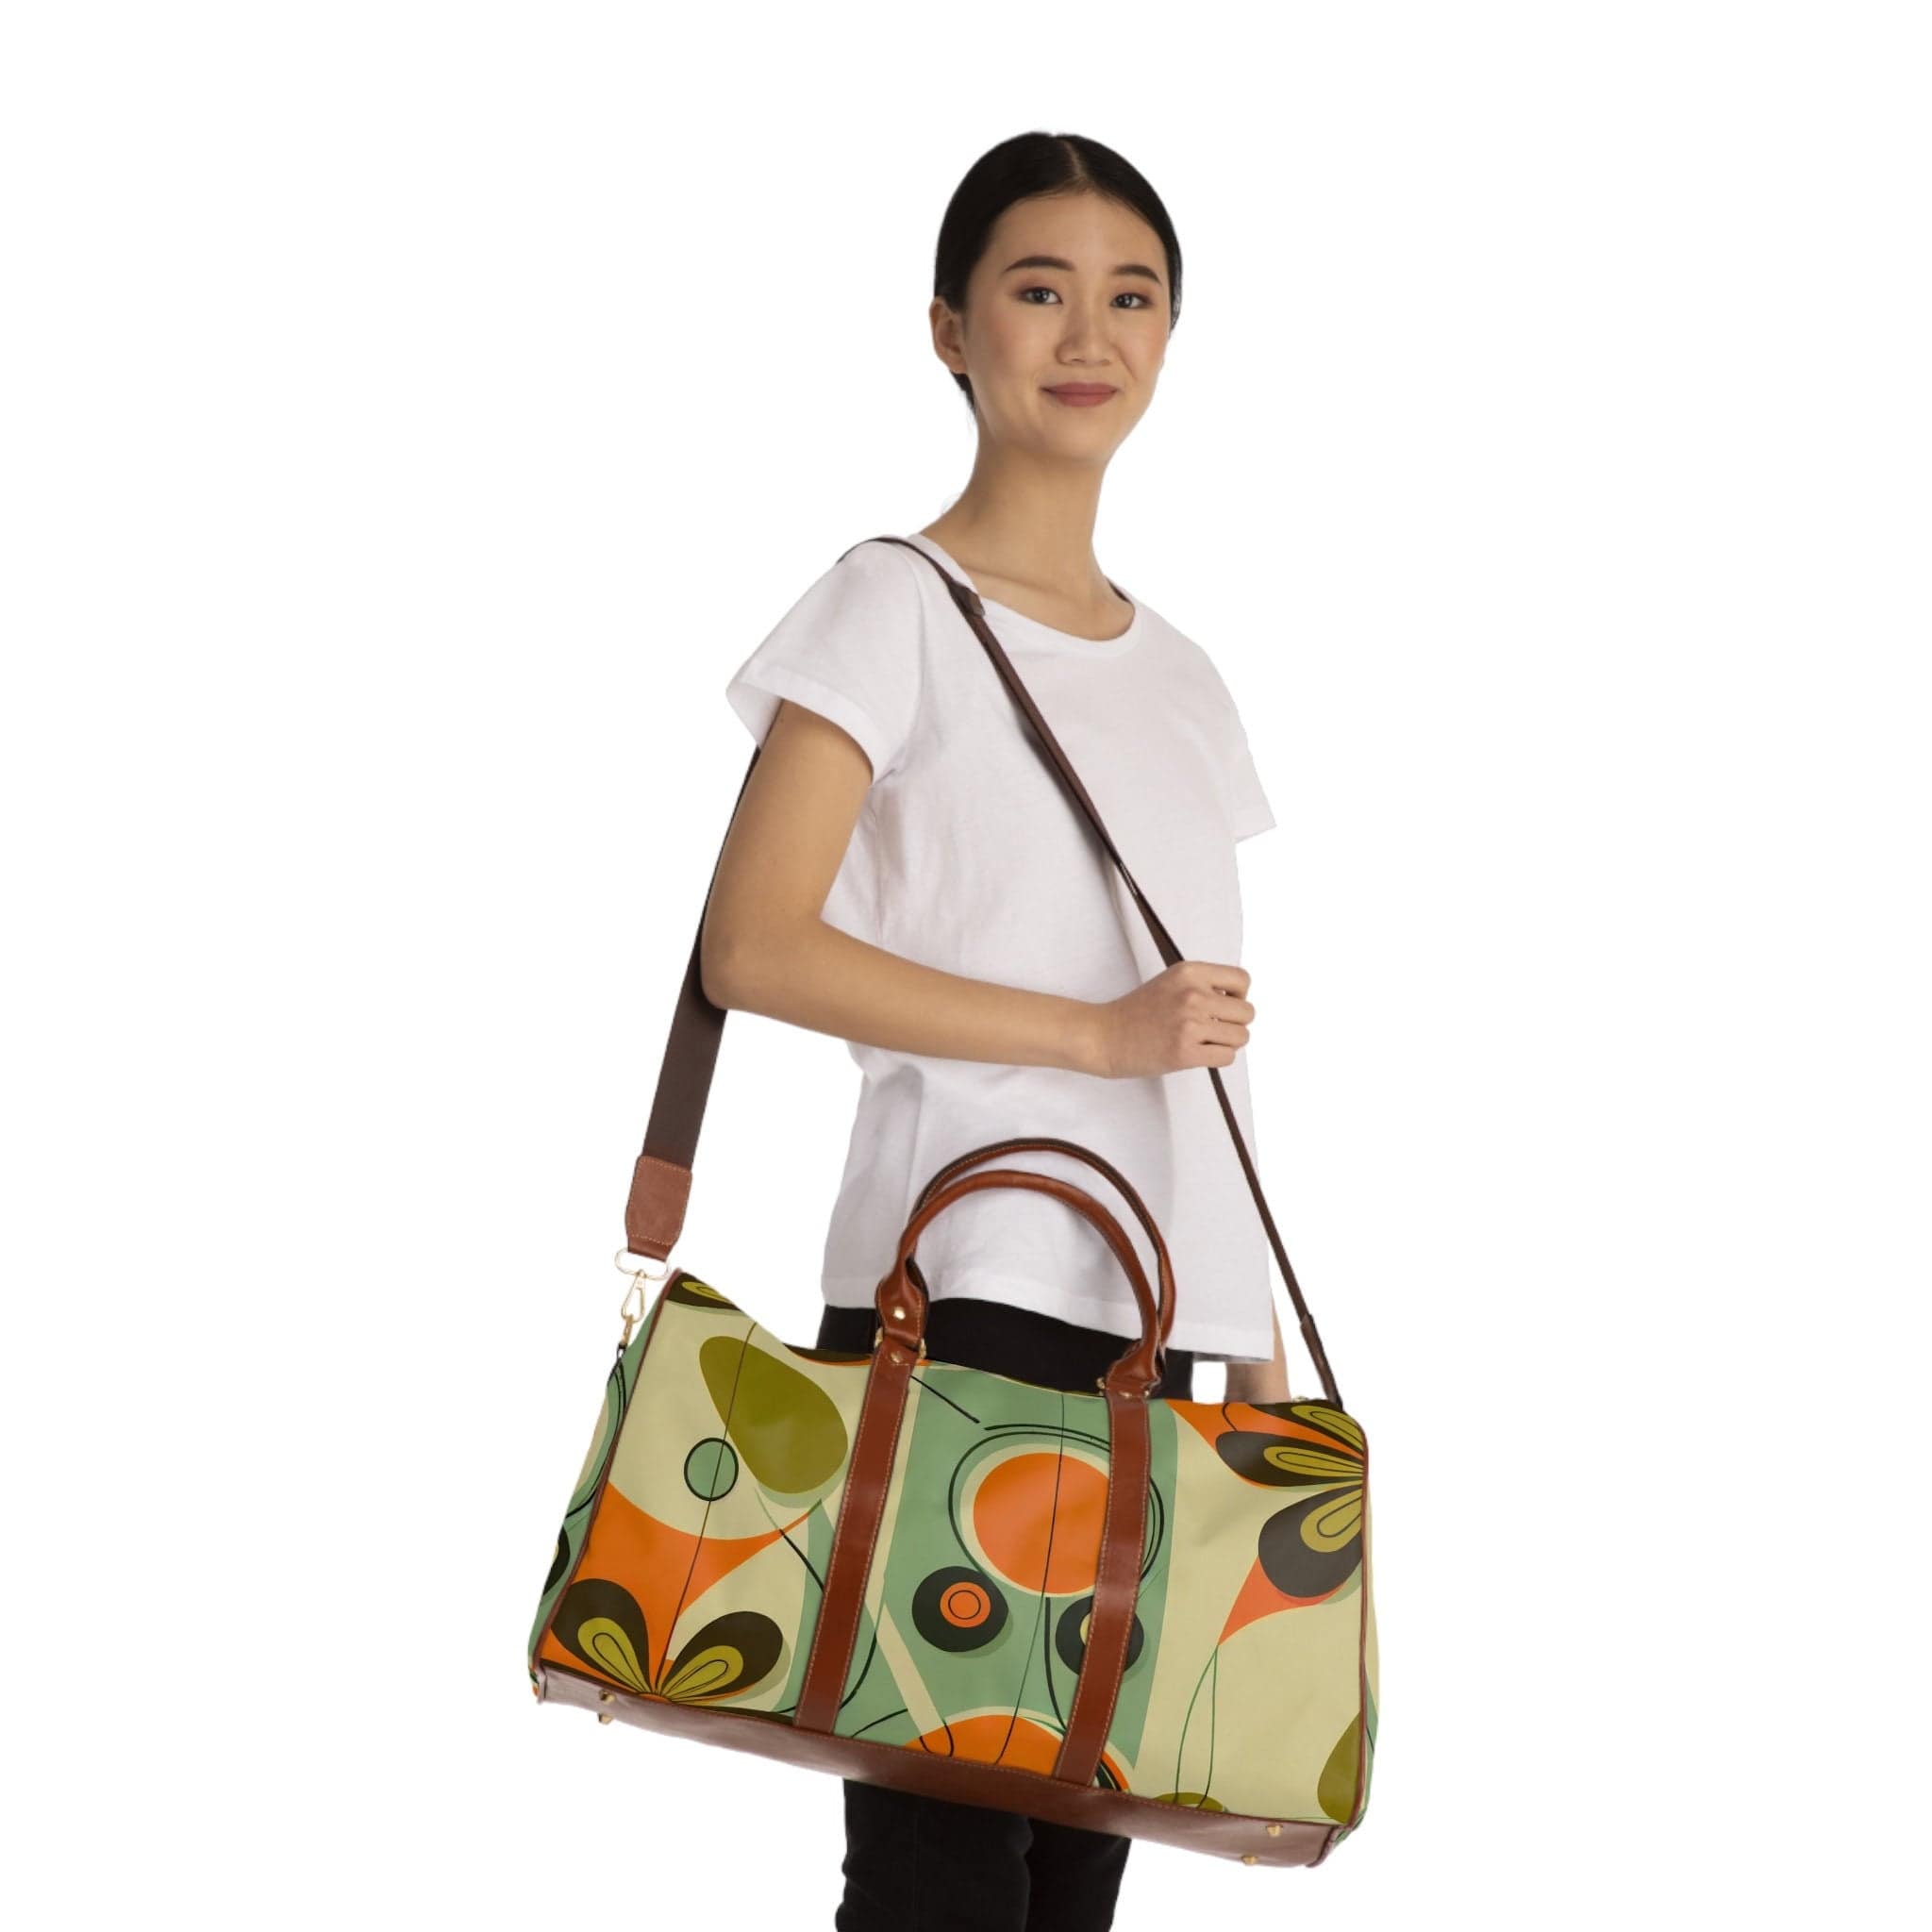 Kate McEnroe New York Retro 60s Mid Mod Daisy Travel Bag, MCM Geometric Duffel Bag, Leather, Fabric Carry on Bag, Weekender Bag - 123581223 Duffel Bags 48667519455570585360